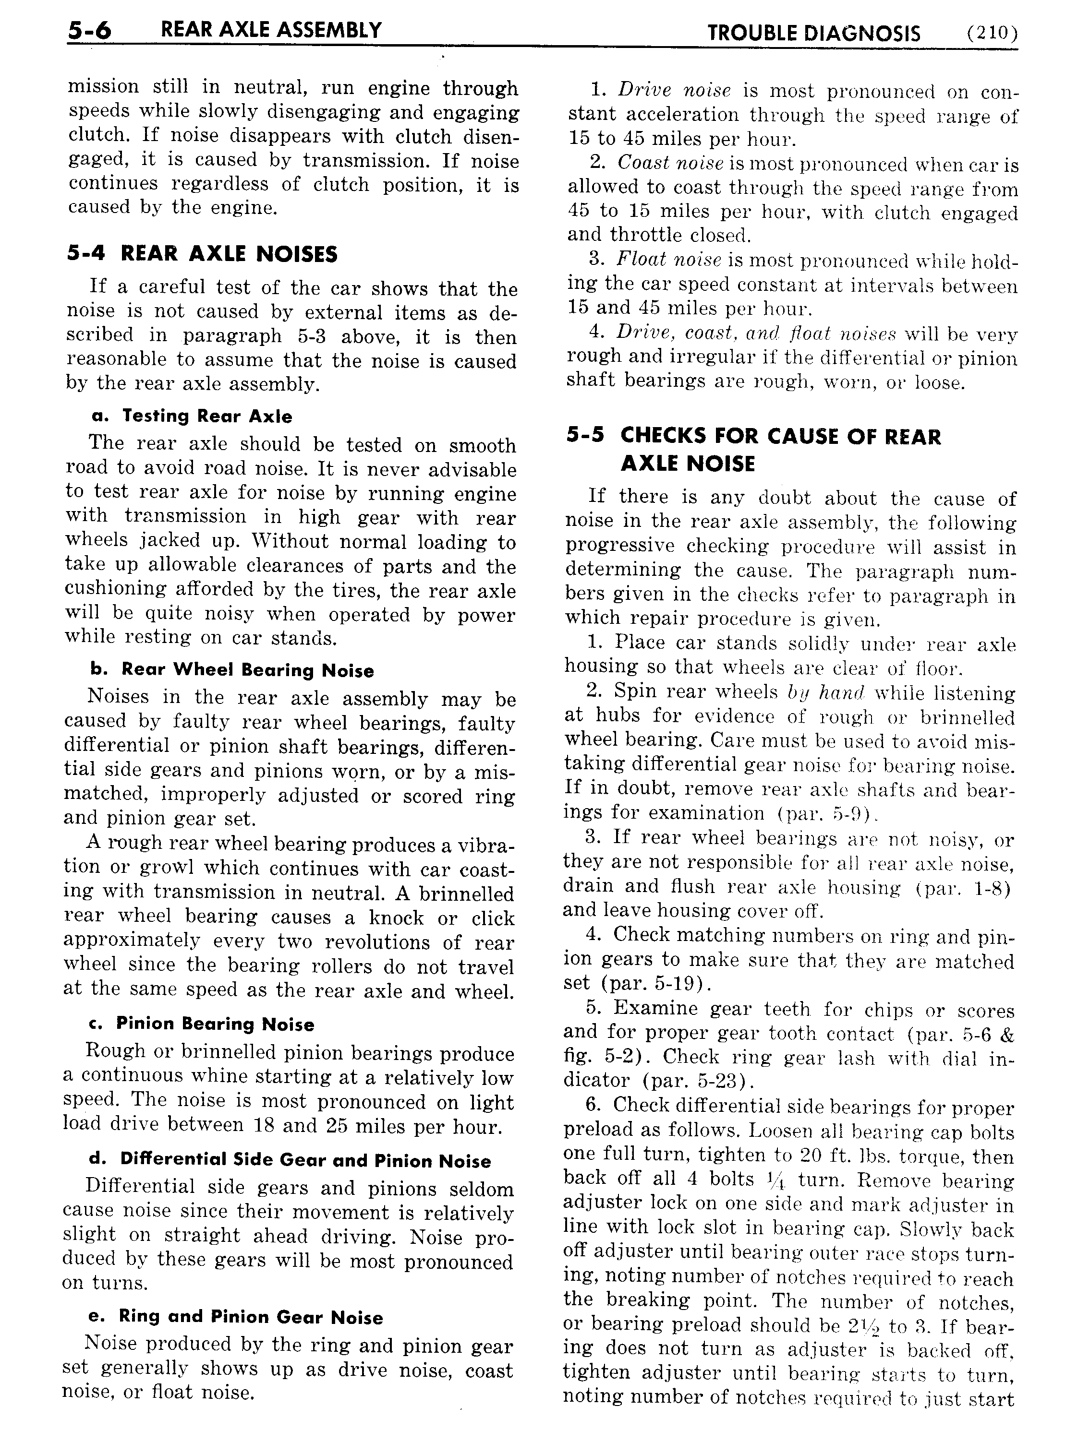 n_06 1951 Buick Shop Manual - Rear Axle-006-006.jpg